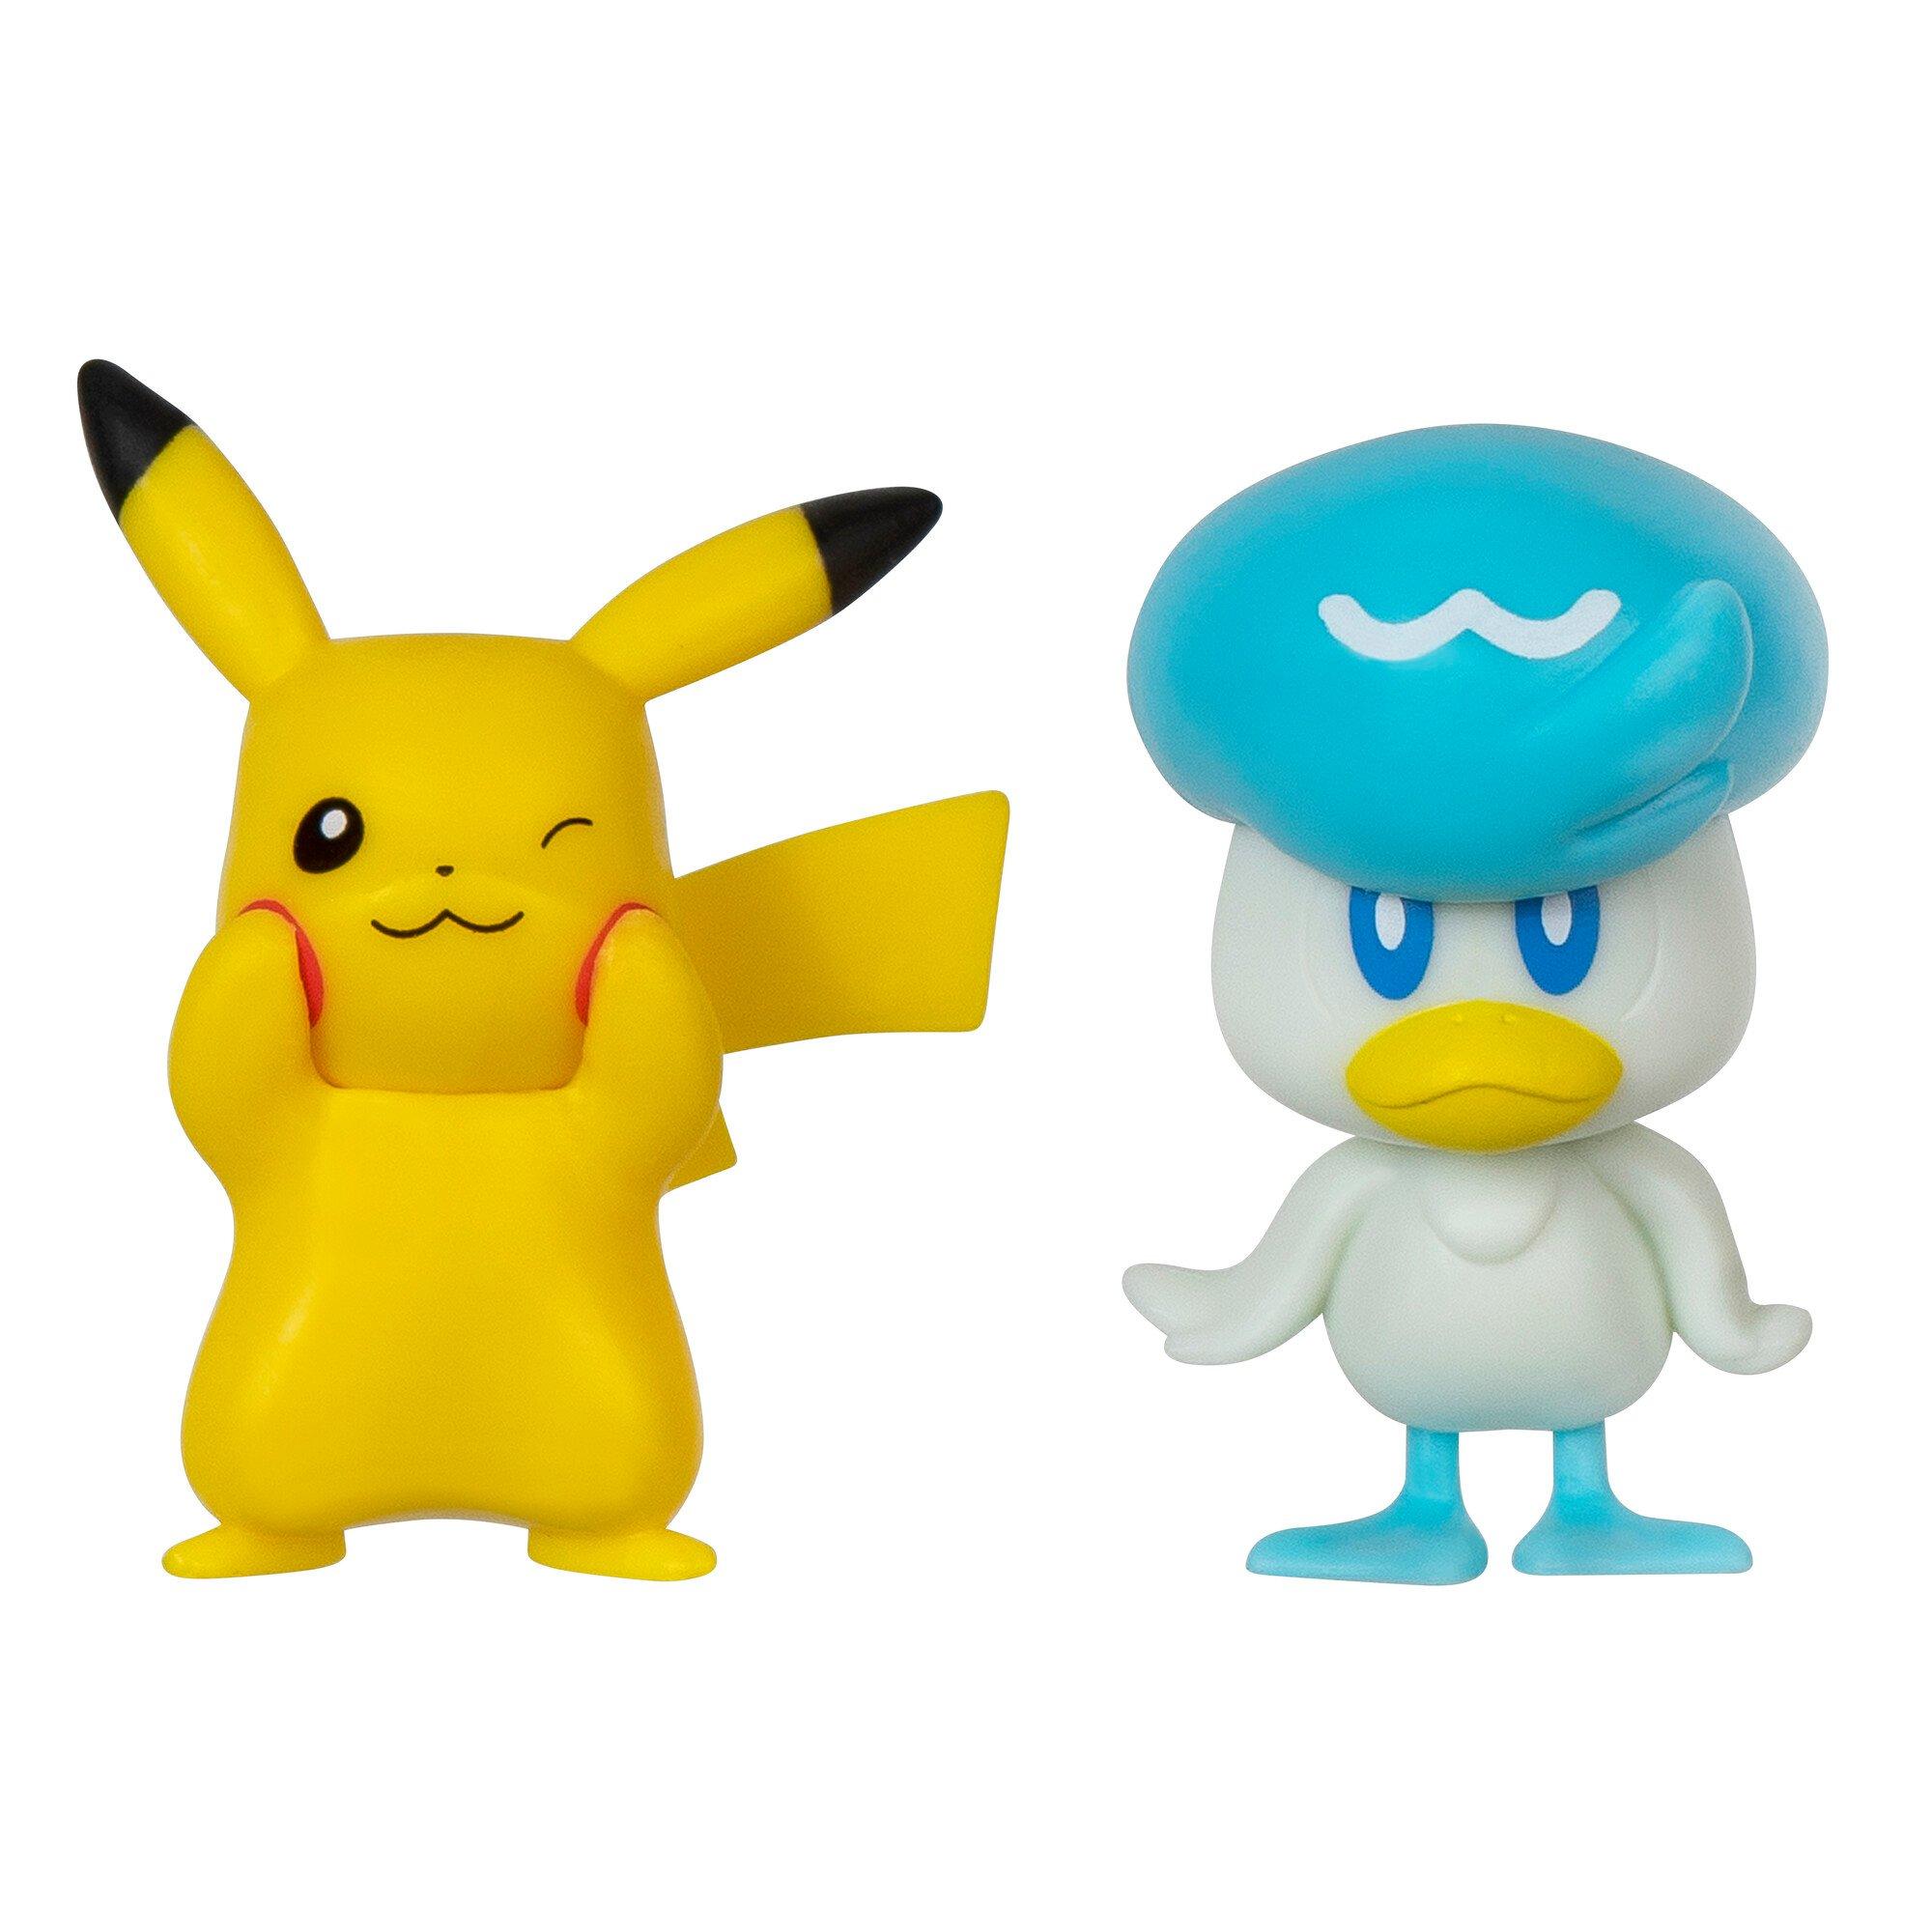 https://media.gamestop.com/i/gamestop/20003878/Jazwares-Pokemon-First-Partner-Quaxly-and-Pikachu-Battle-Set-2-Pack?$pdp$